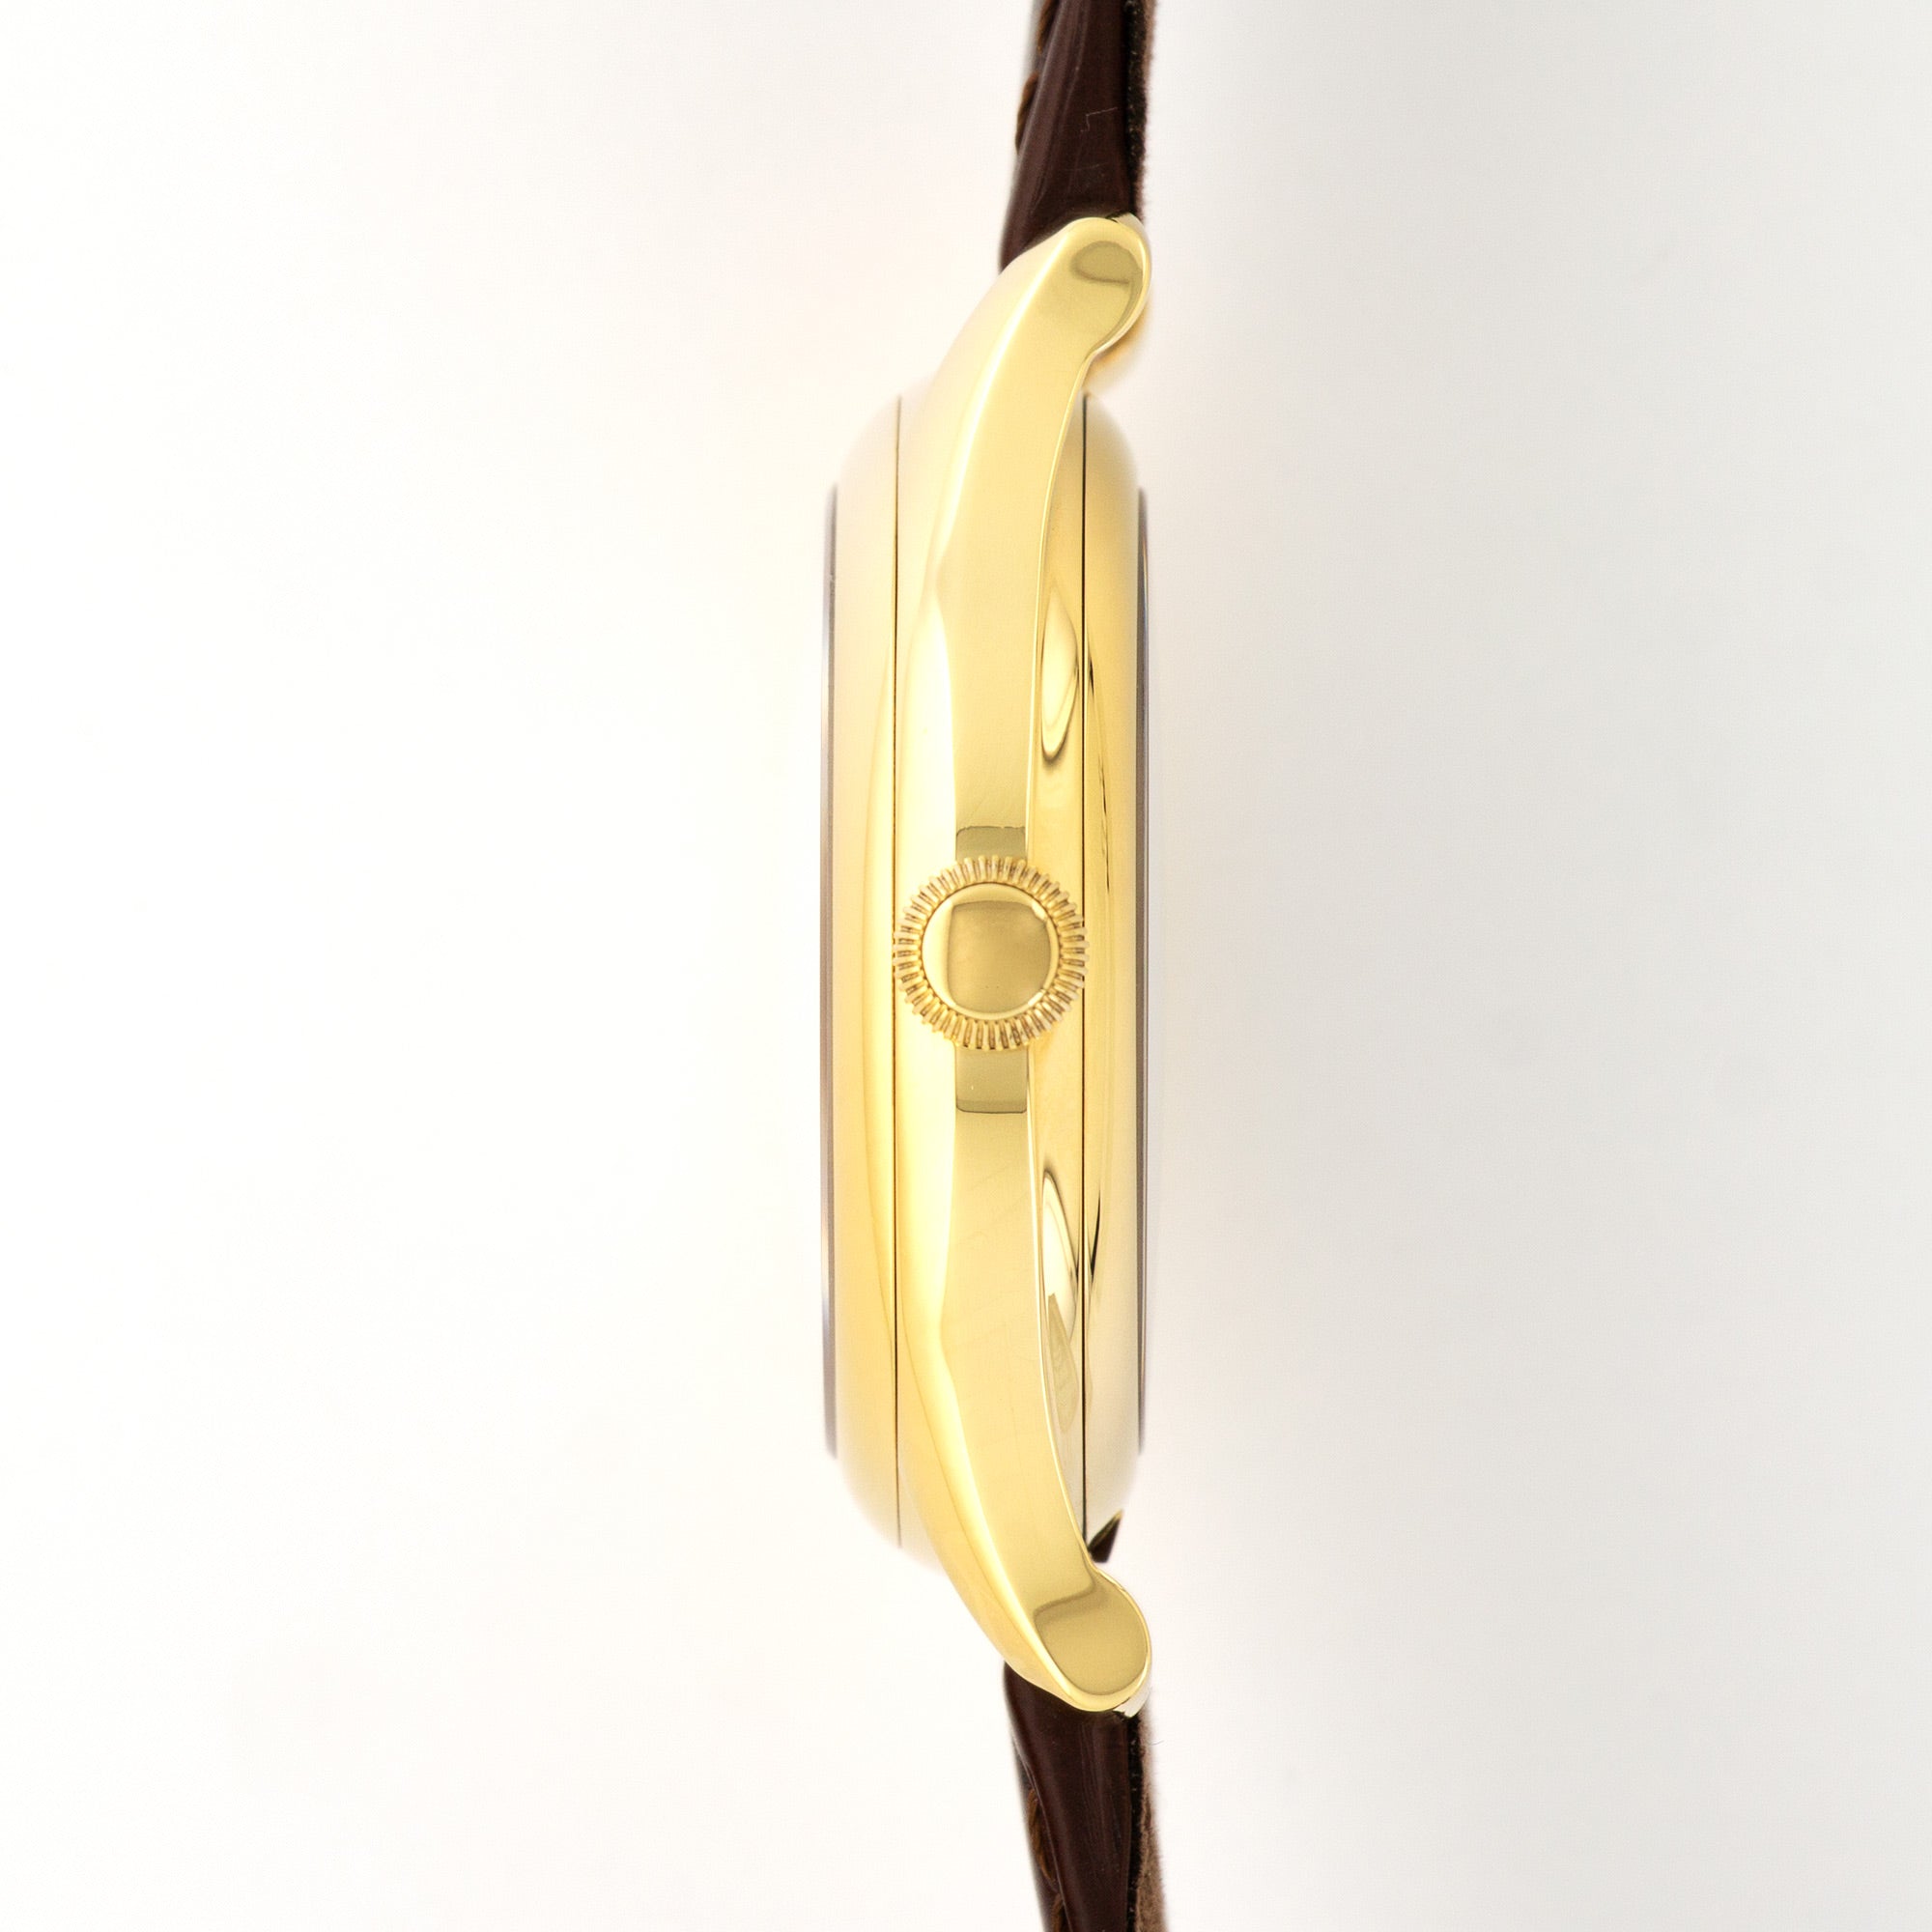 Laurent Ferrier - Laurent Ferrier Galet Tourbillon Double Spiral Watch - The Keystone Watches